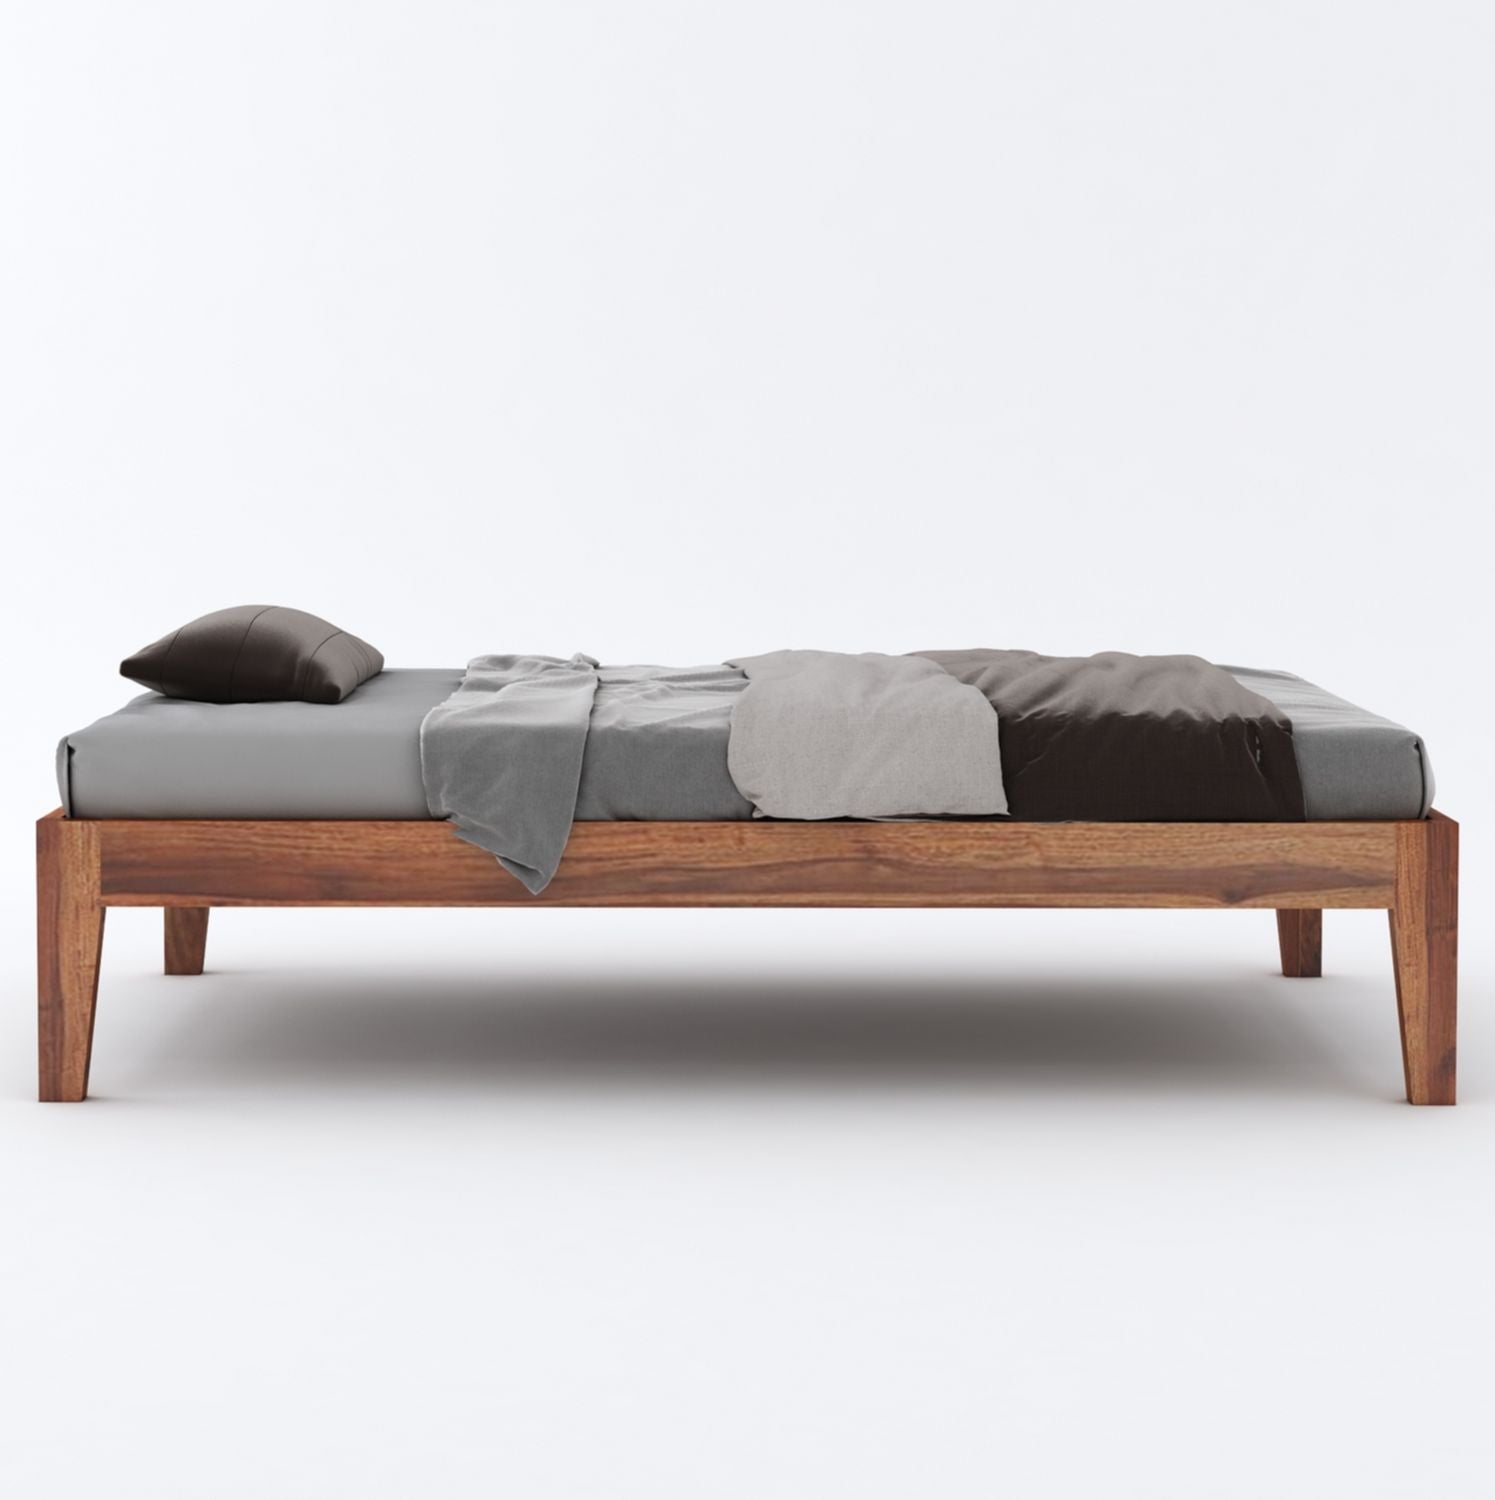 Minimal Solid Sheesham Wood Single Bed Without Storage (Natural Finish)